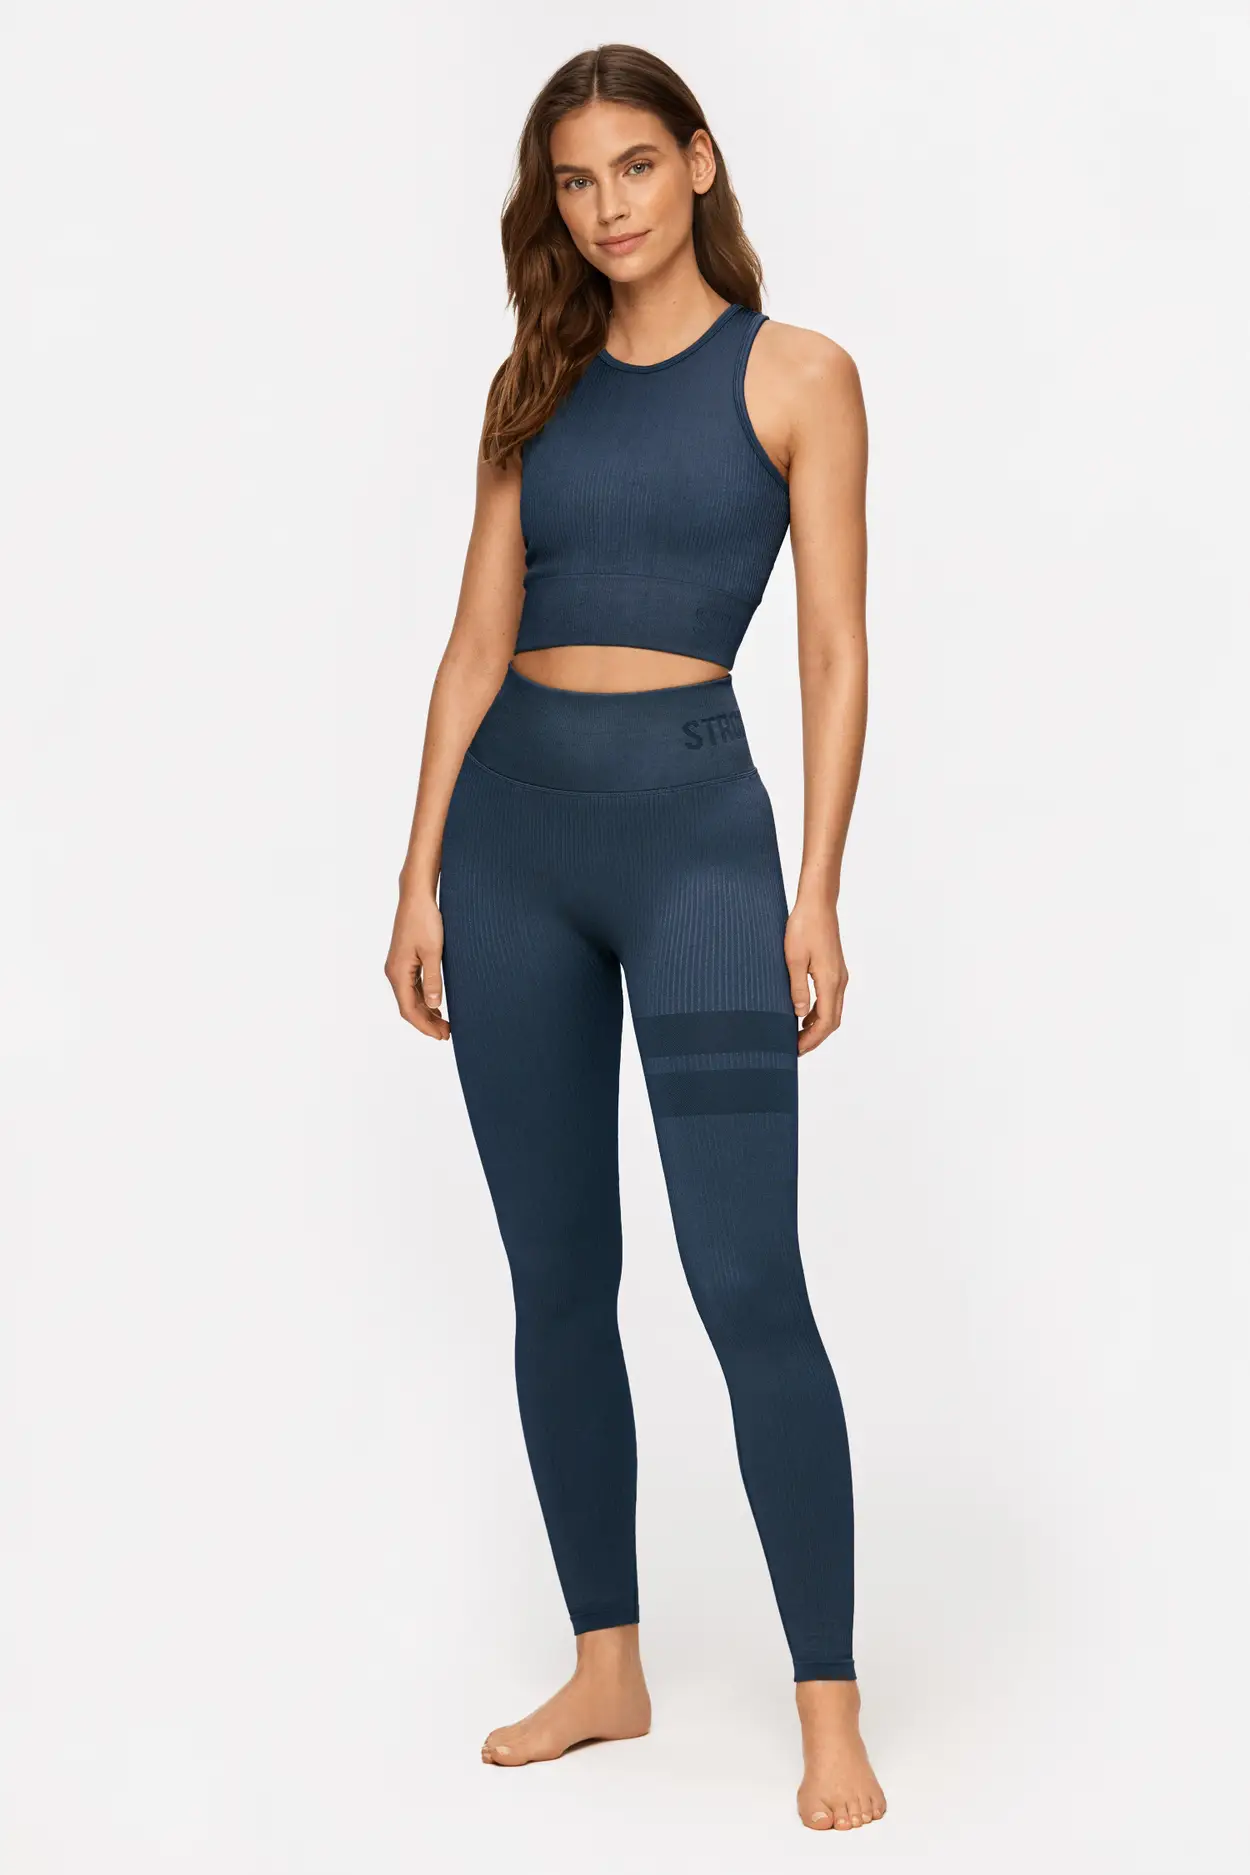 $69 Calvin Klein Performance Women's Active 7/8 Stretch, Tight Legging,  Blue, L 